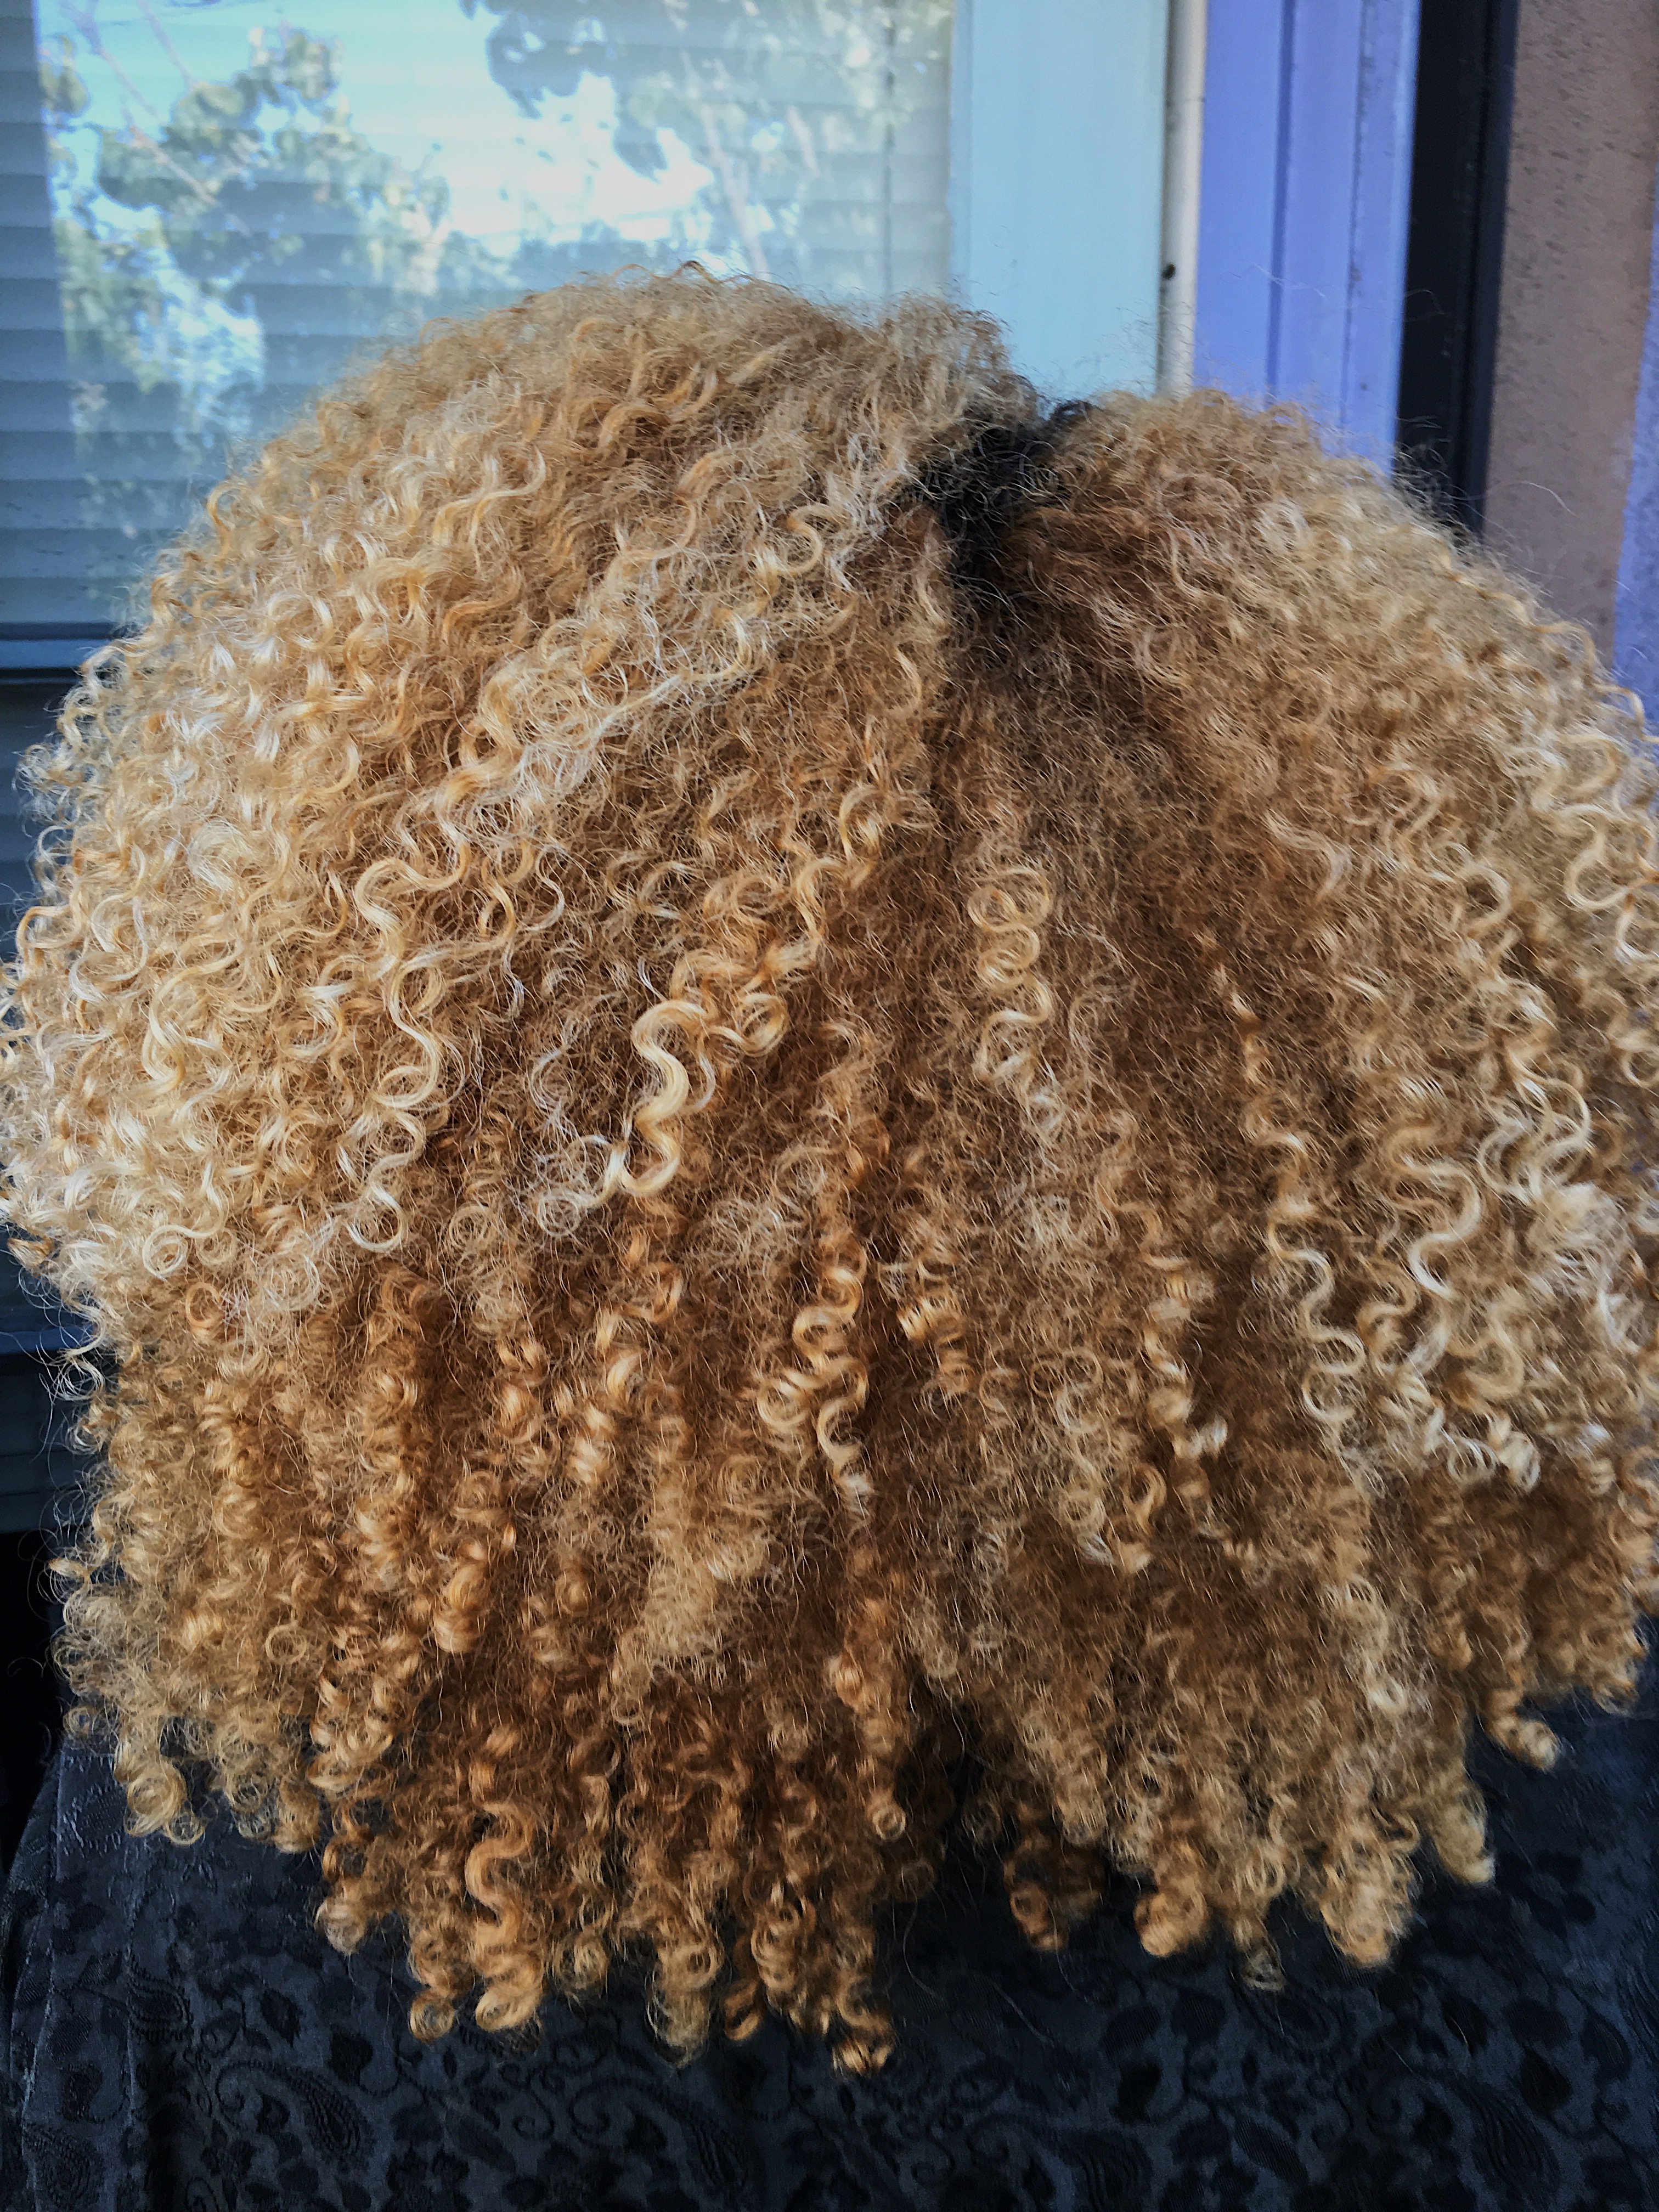 natural hair after using castor oil-blonde curls